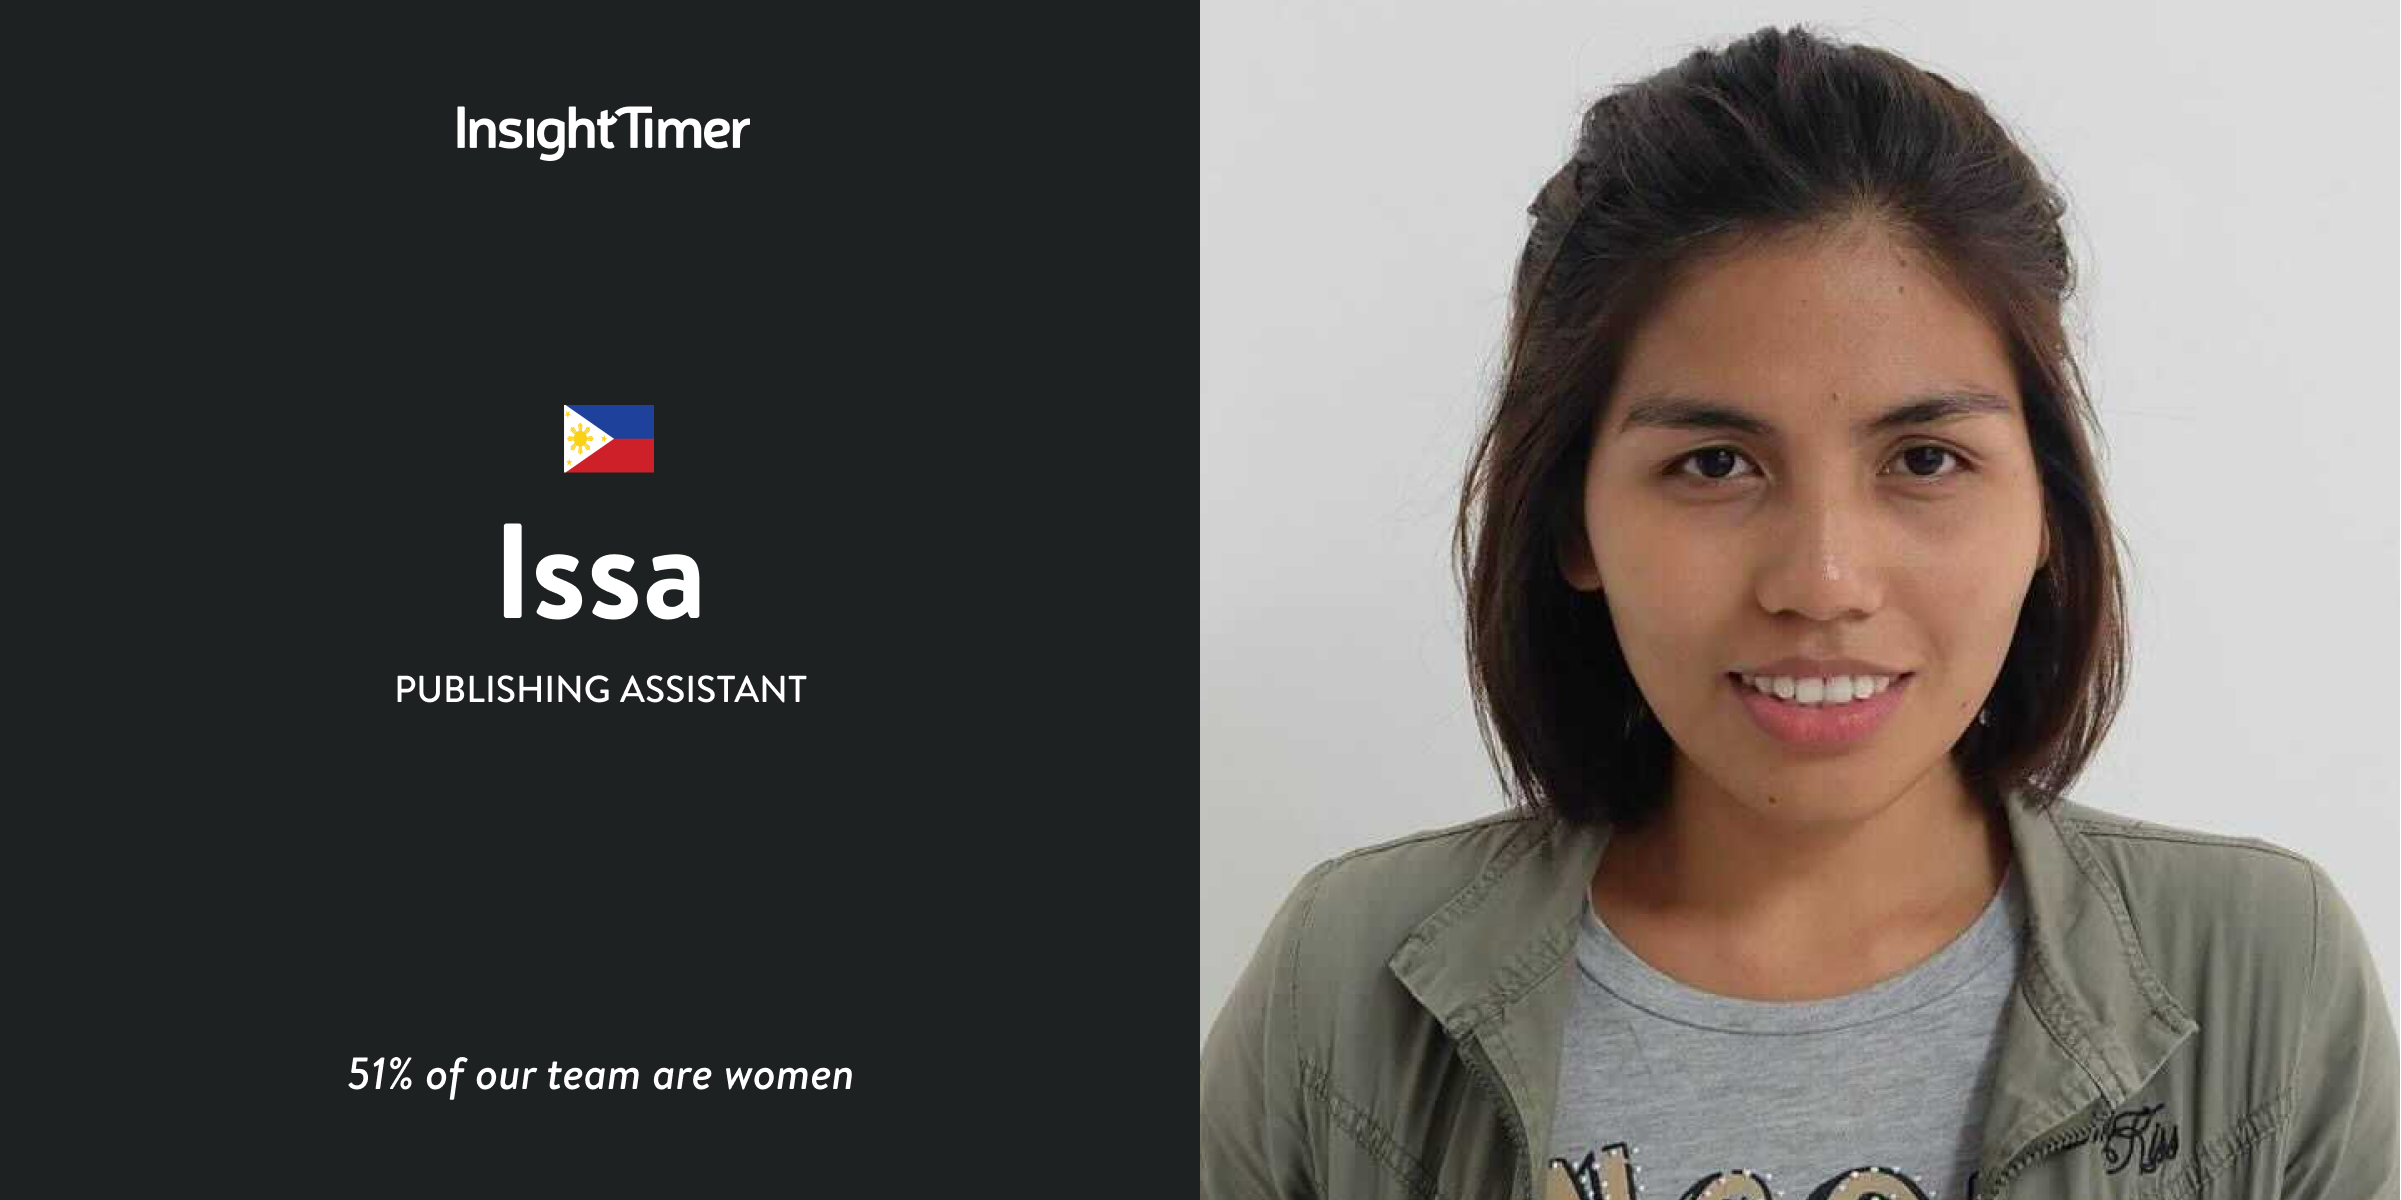 Meet Issa – Publishing Assistant